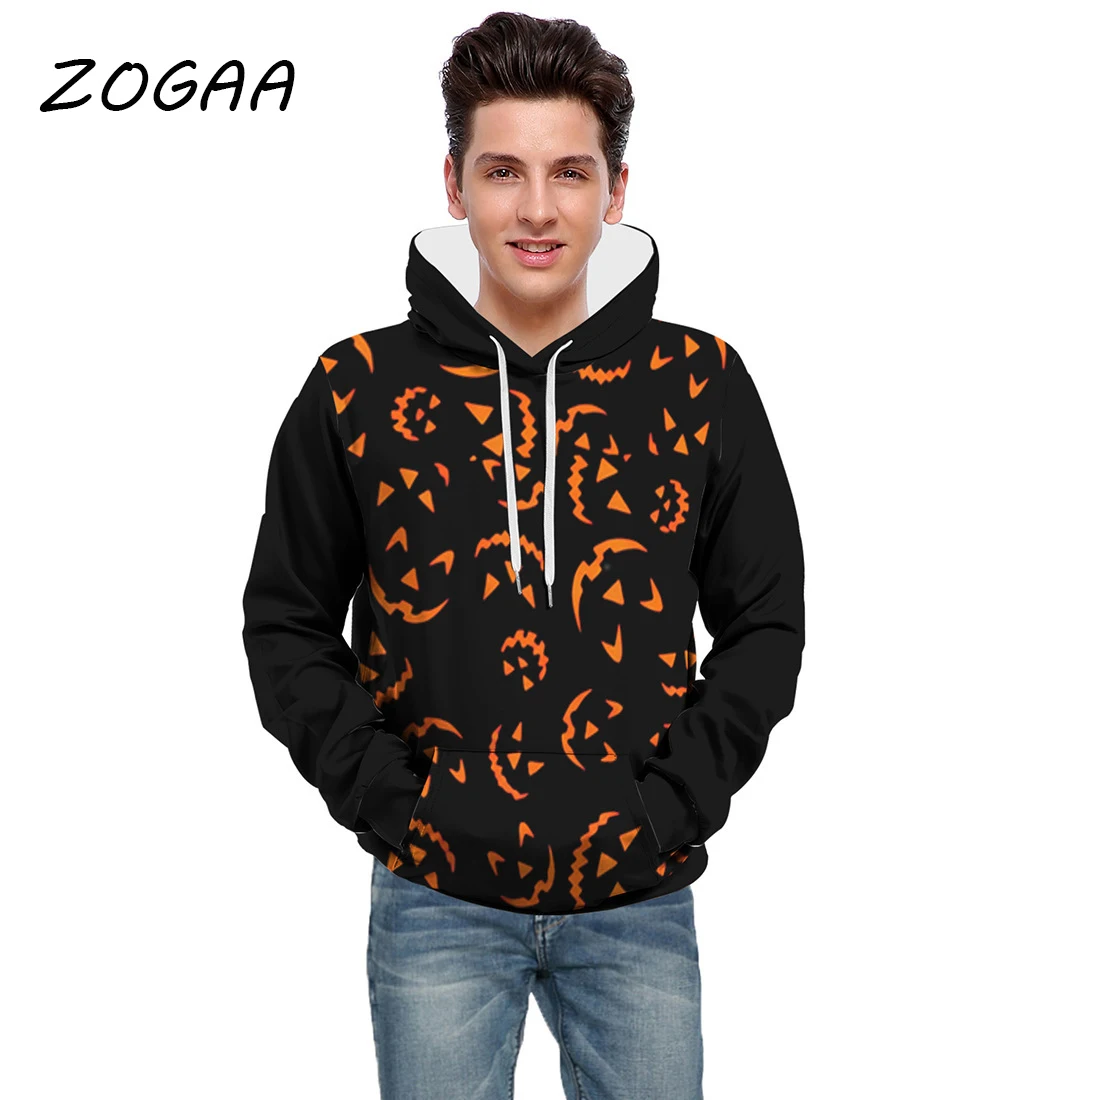 

ZOGAA 2021 New Fashion Winter Men's Hooded Thickened Sweatshirt Casual Printed Harajuku Sweatshirt Large Size Men's Jacket Top